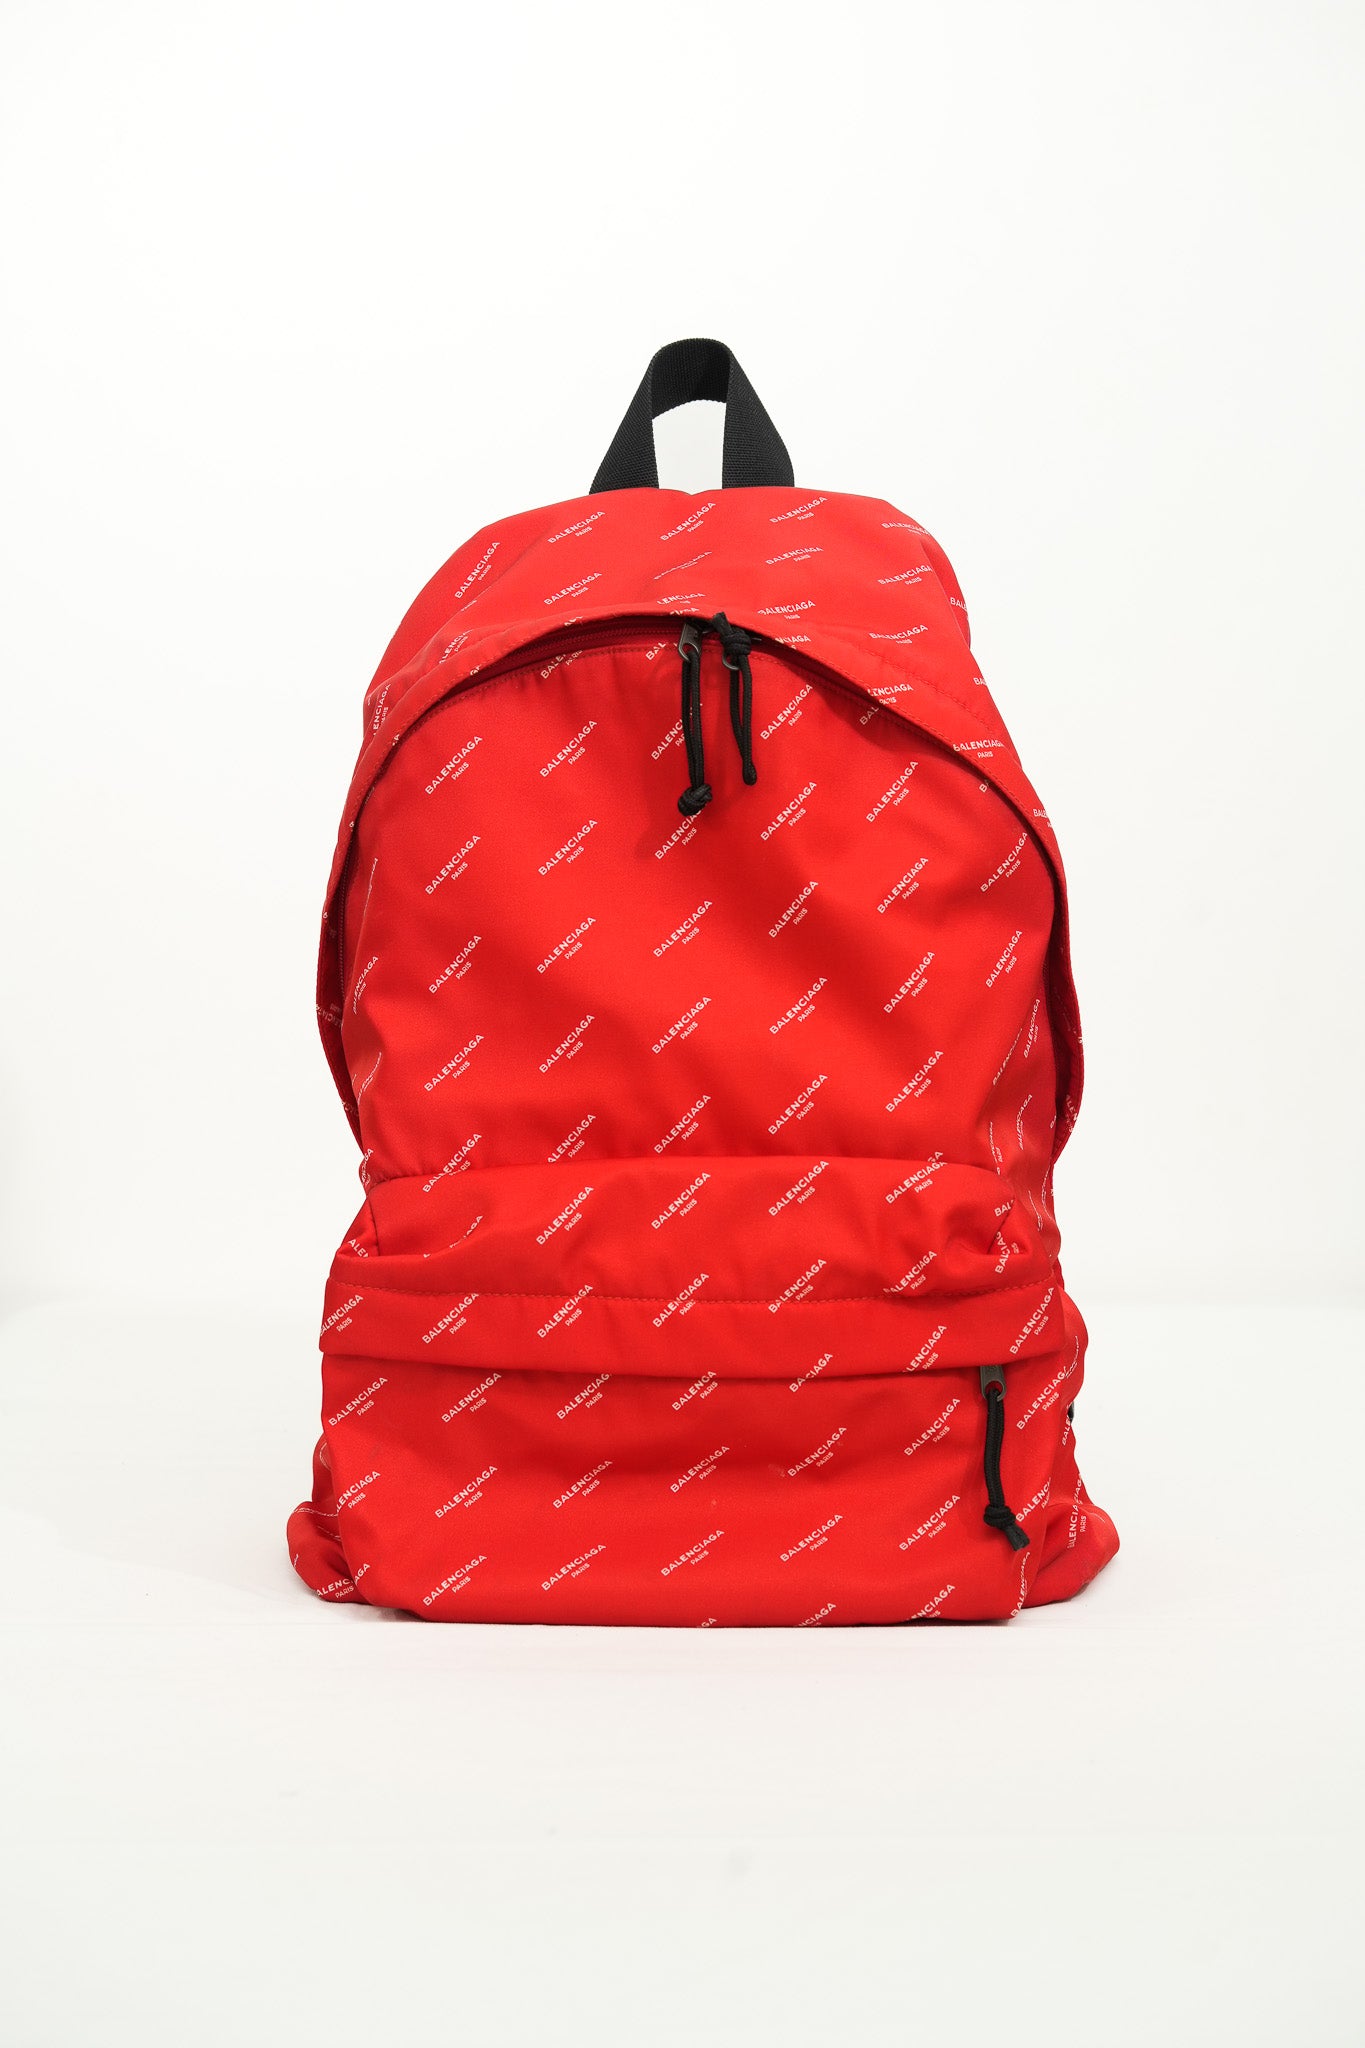 Sac à dos/Backpack de Seconde main Balenciaga Rouge et Blanc